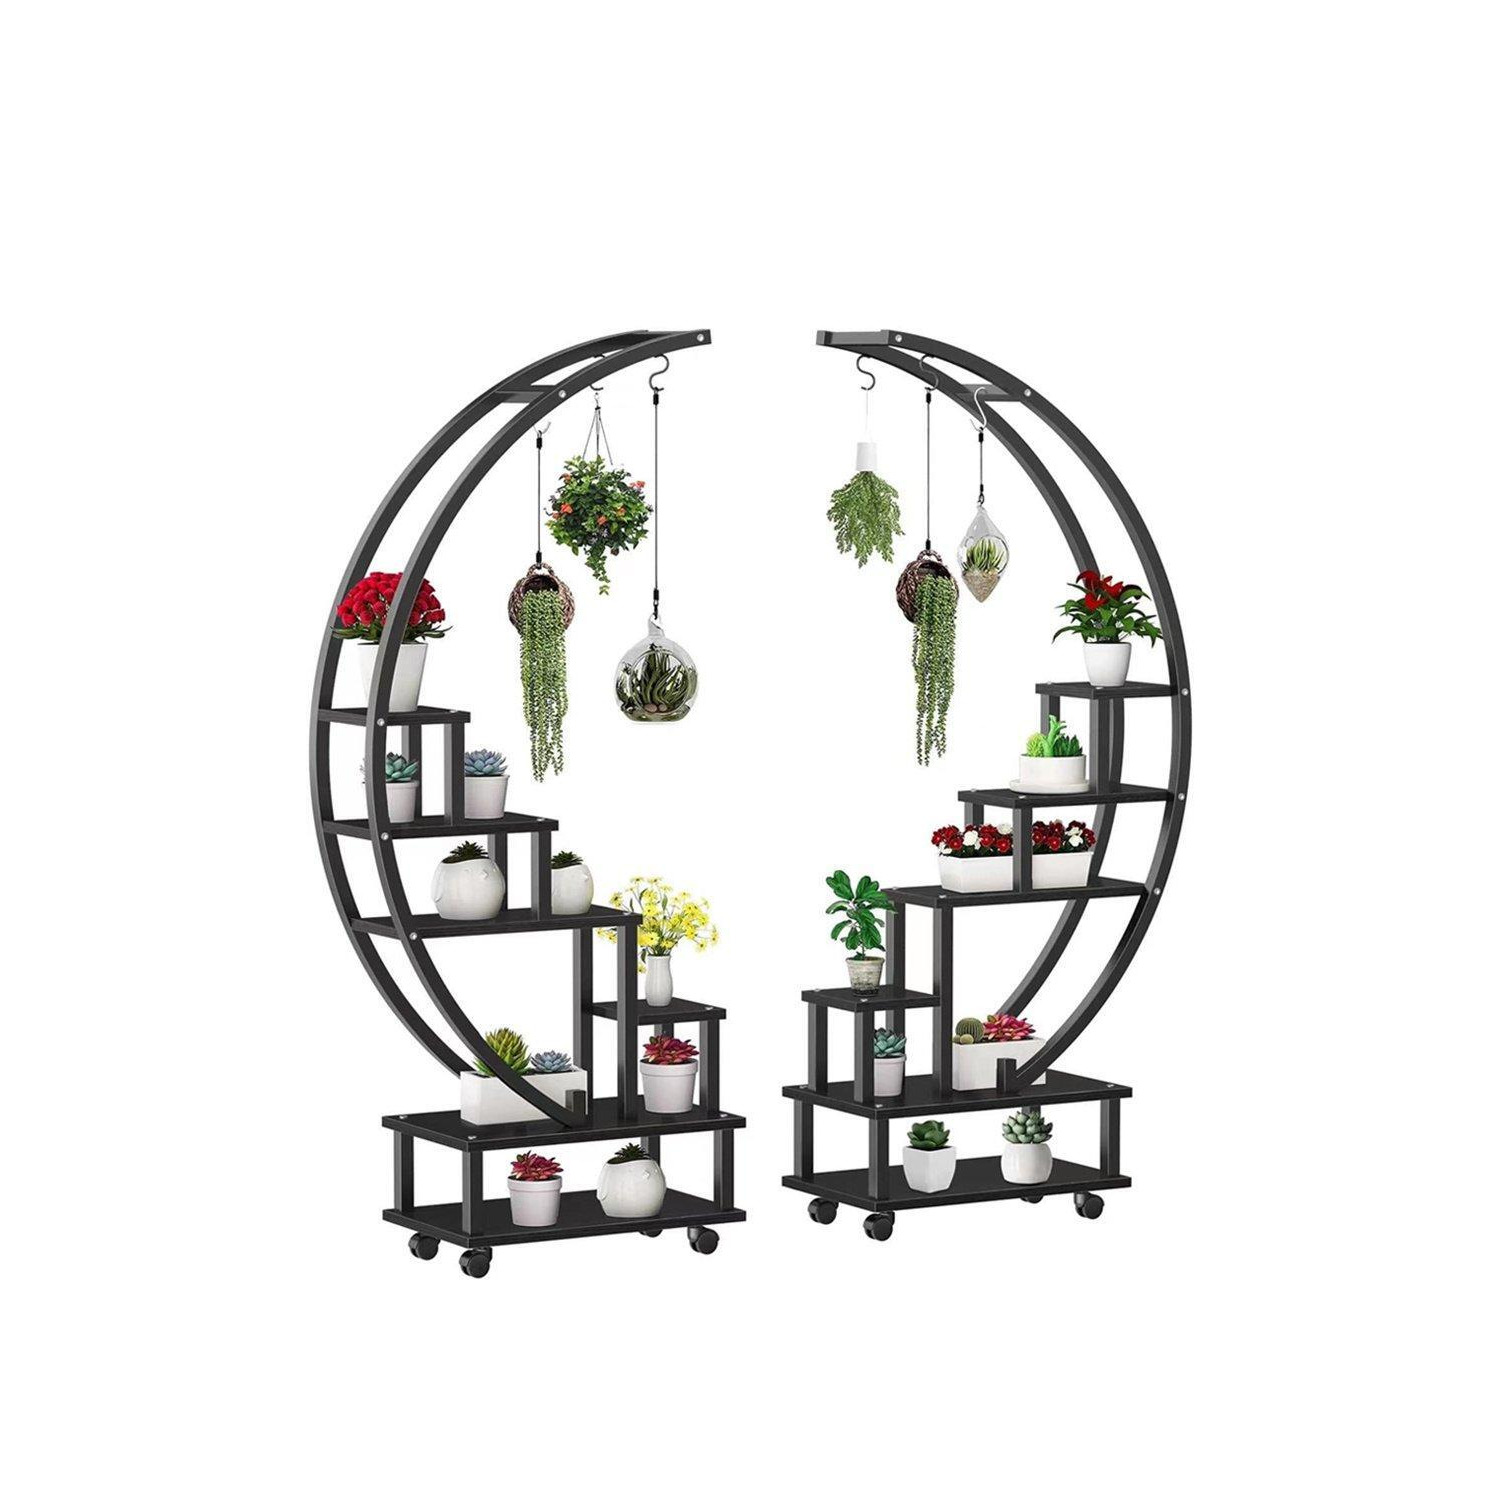 2pcs Half-Moon-Shaped Plant Stand Display Shelf with Wheels - image 1